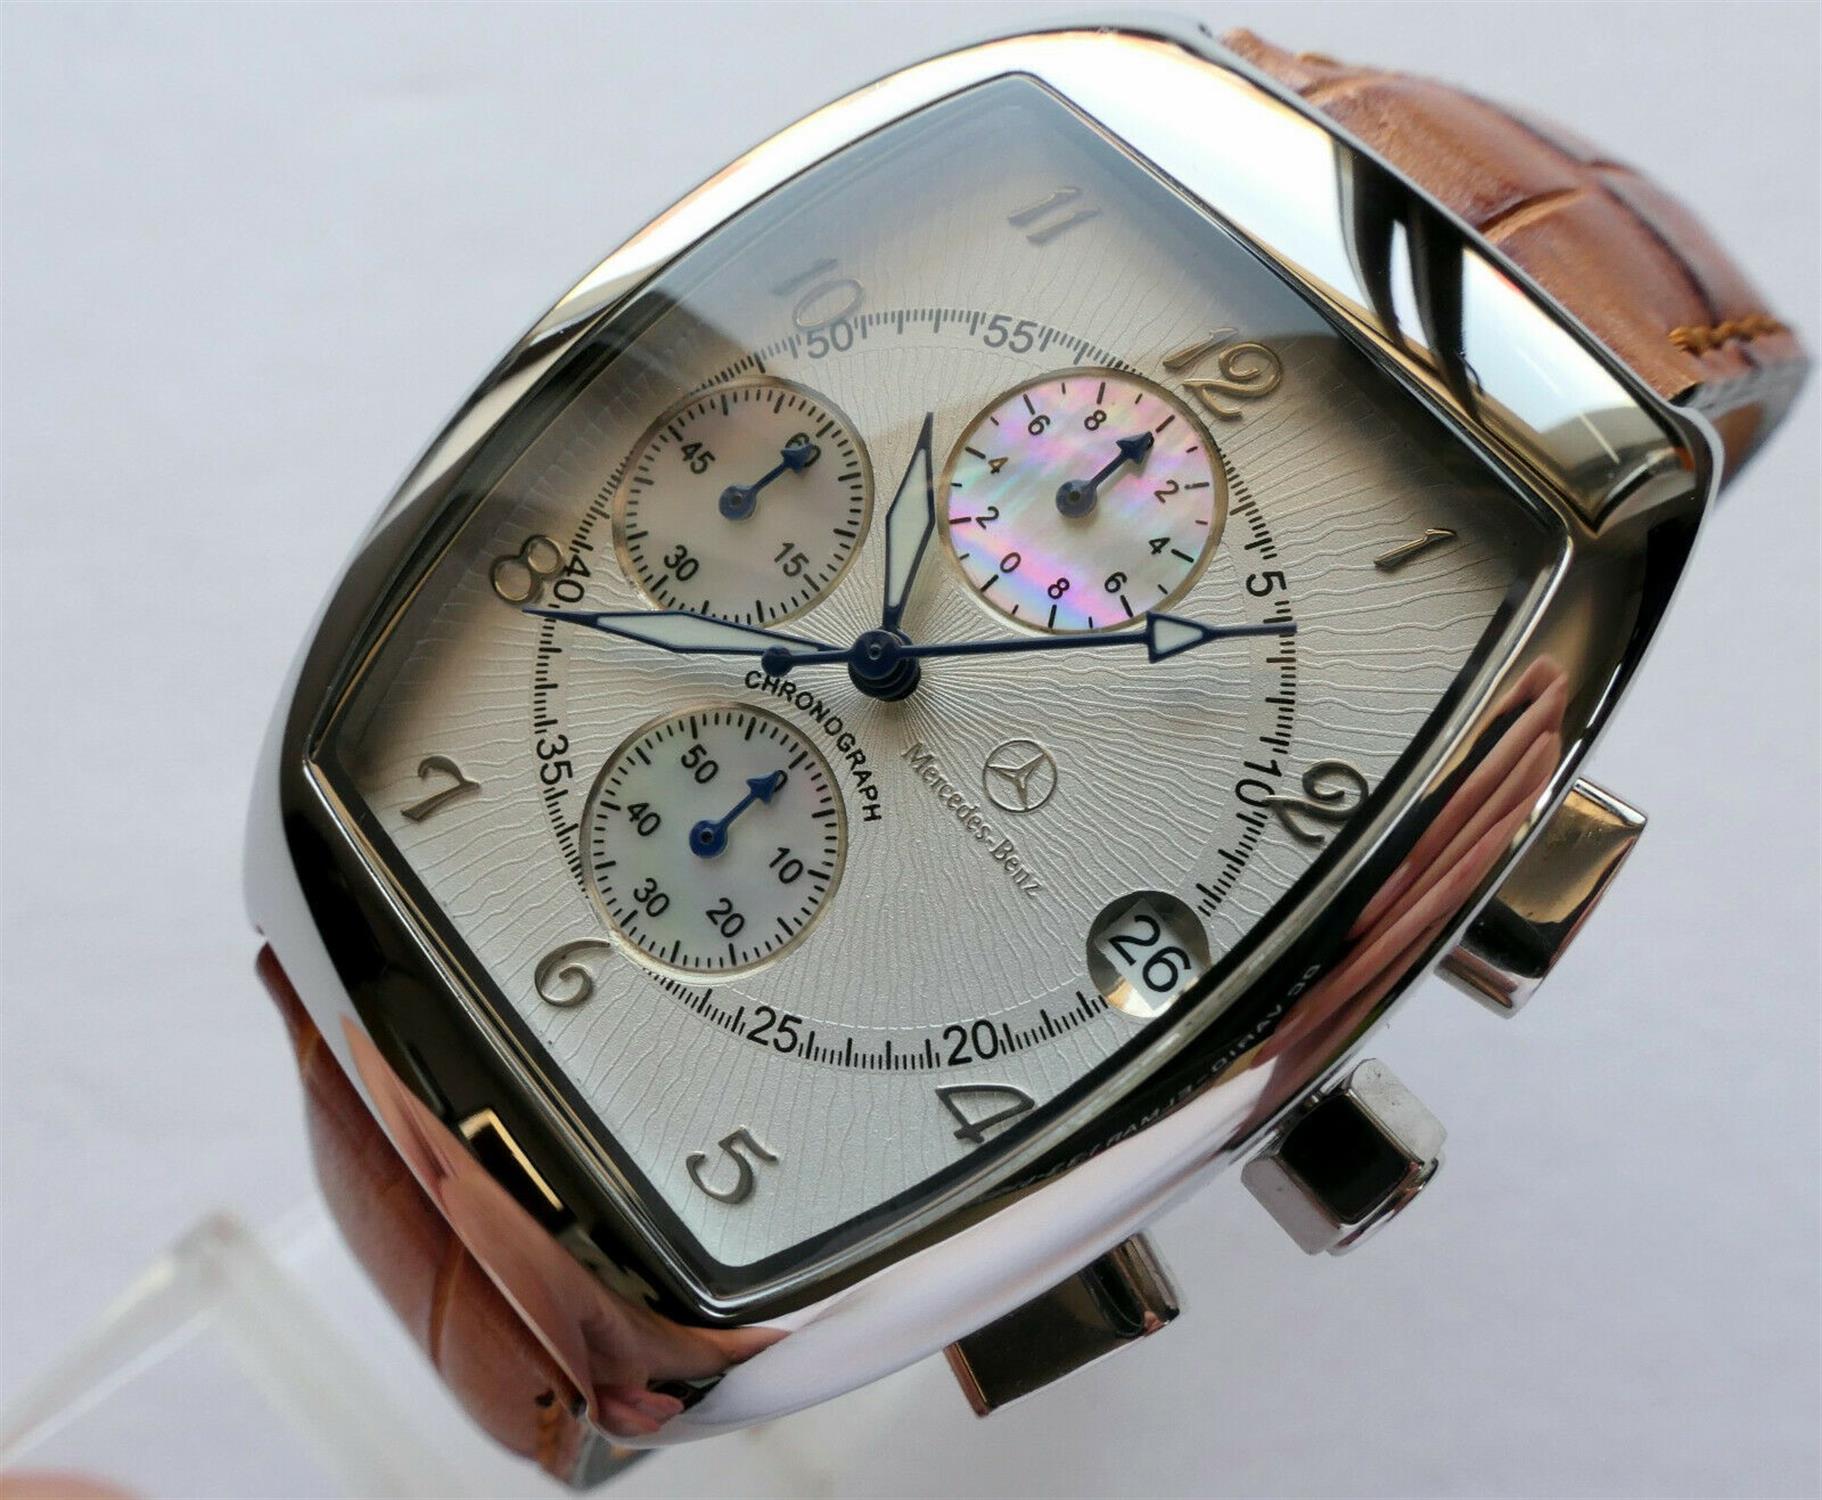 A Superb Mercedes-Benz Art-Deco Style Gentleman’s Chronograph Wristwatch - Image 2 of 9